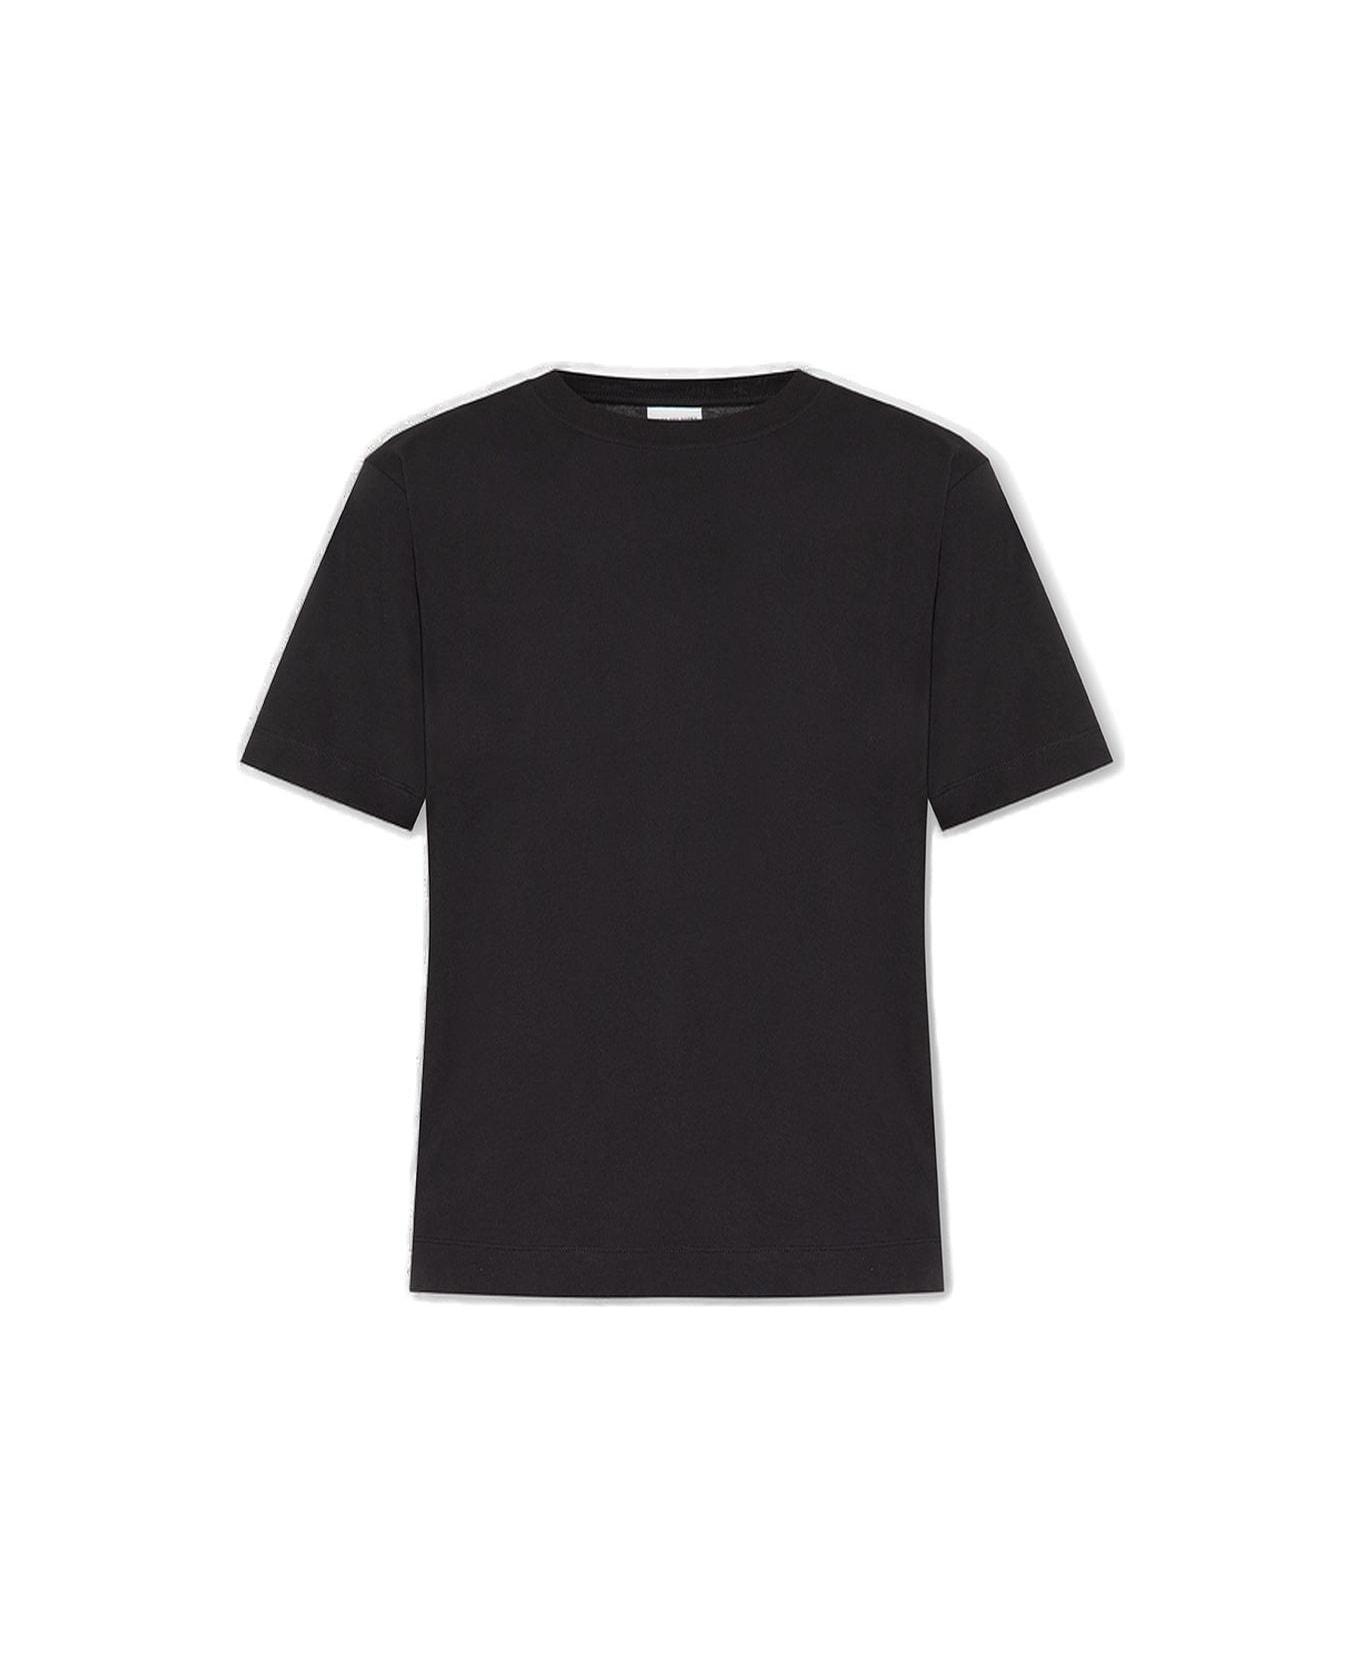 Dries Van Noten Crewneck T-shirt - Black